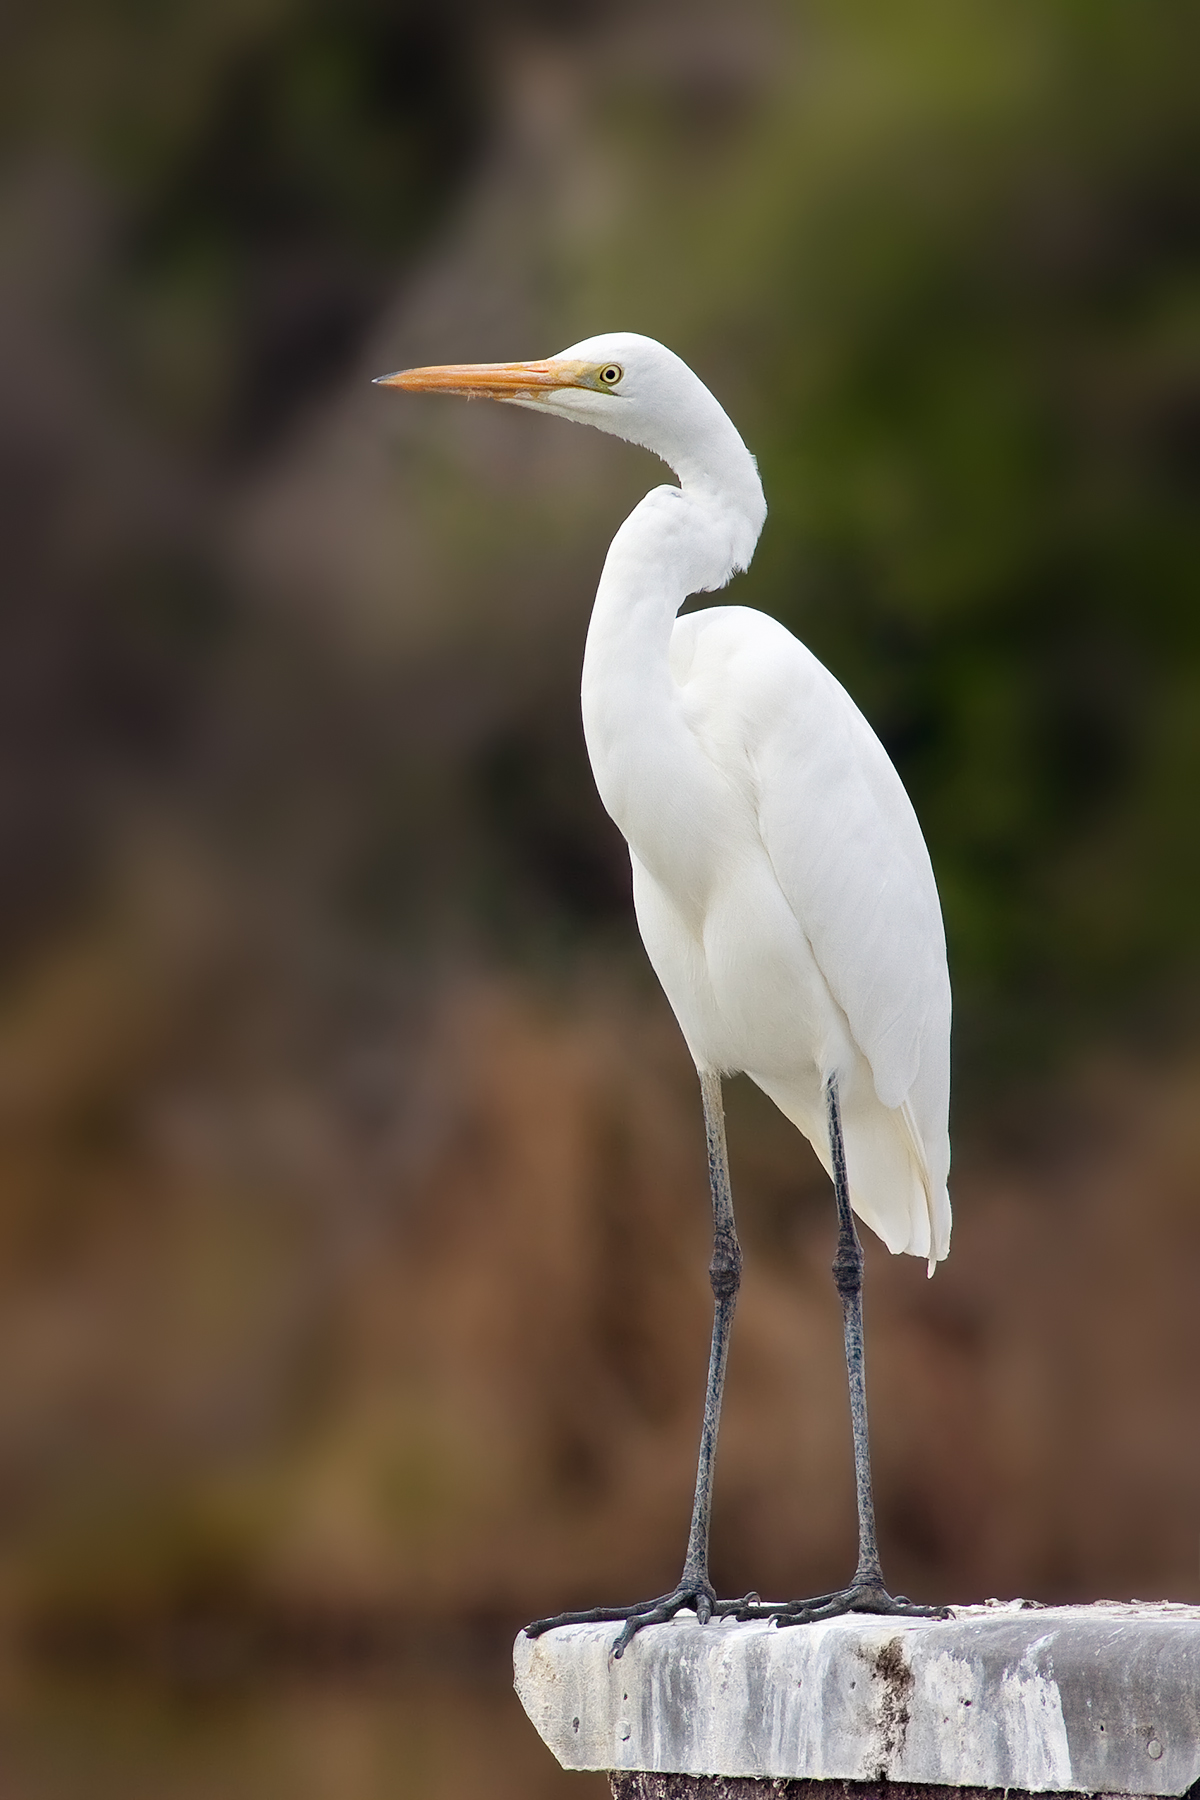 Giant egret photo